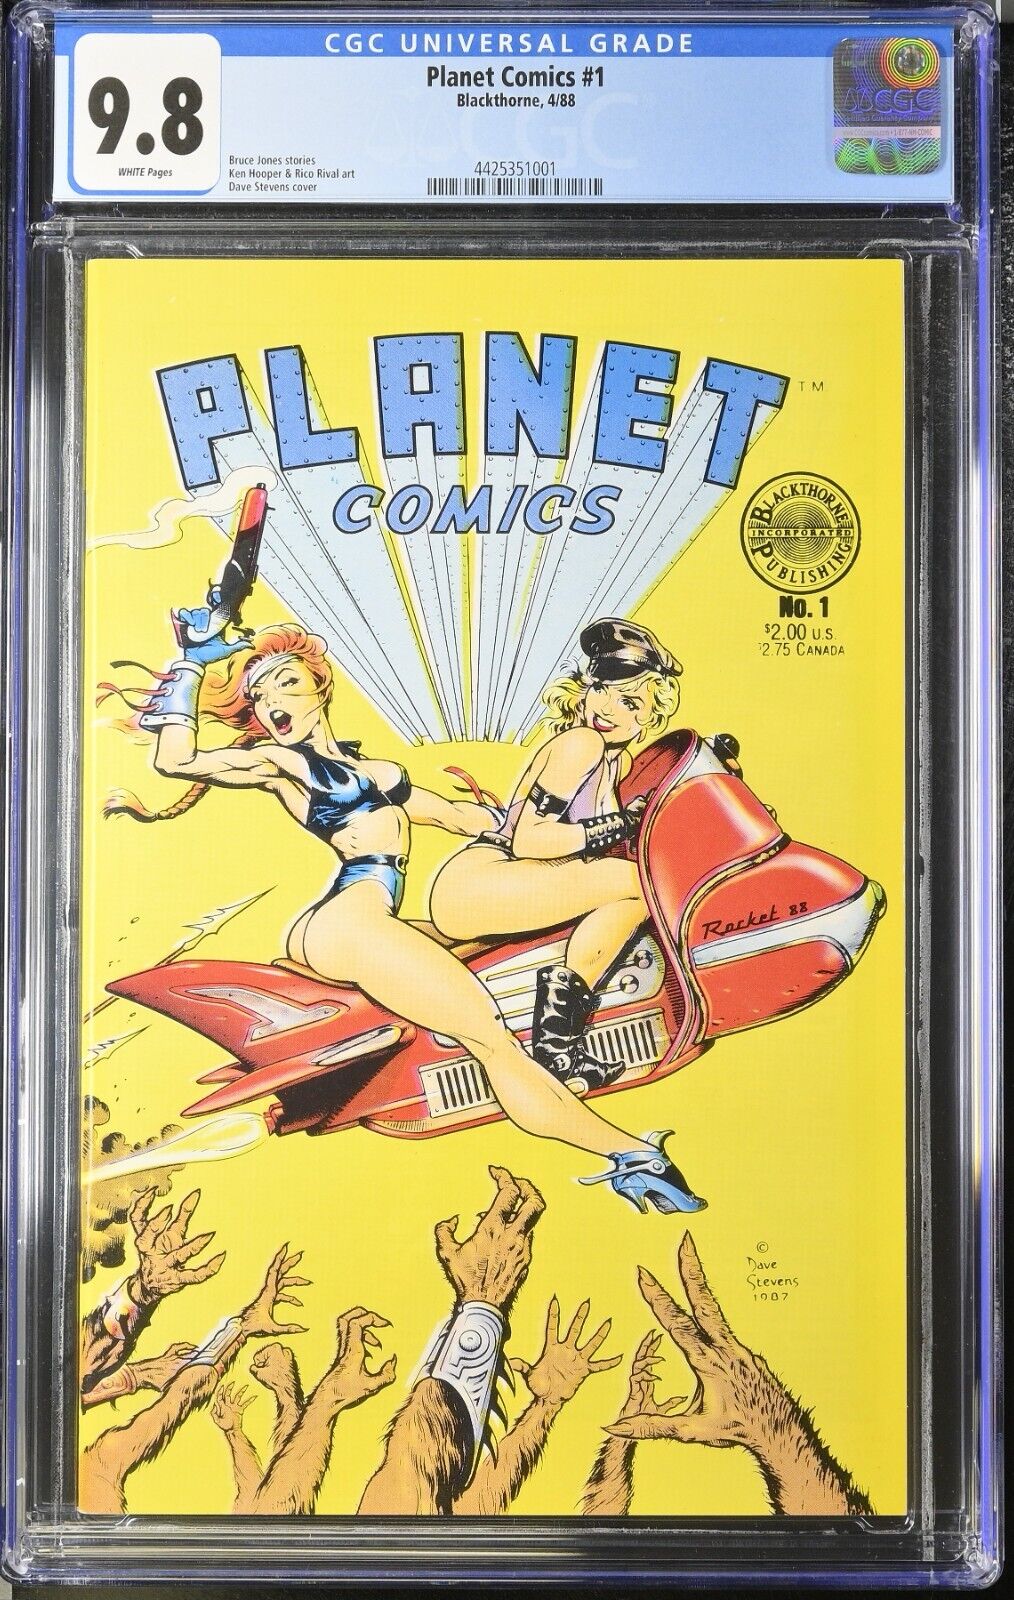 PLANET COMICS #1 - CGC 9.8 - WP - NM/MT - CLASSIC DAVE STEVENS COVER